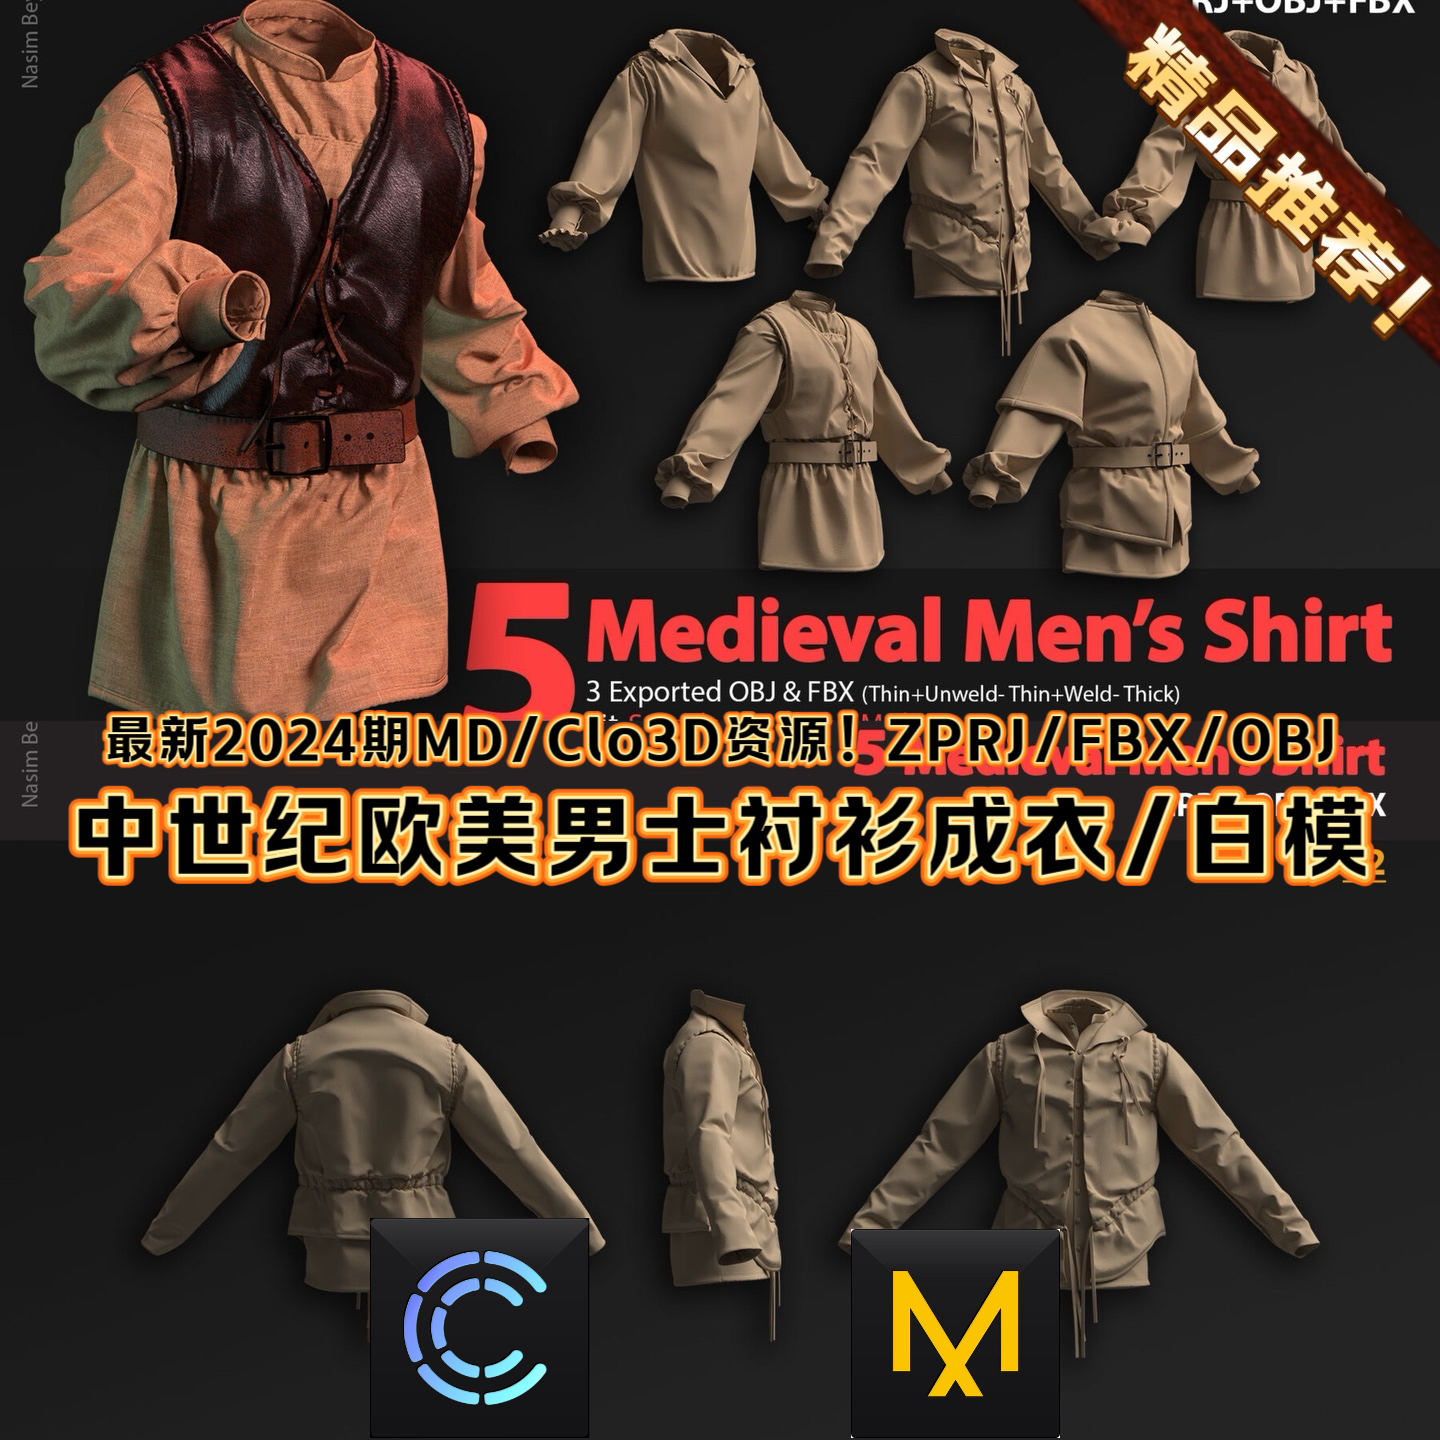 MD+Clo3D男士服装欧美优雅复古衬衫设计感外套3D模型 MD衣服素材